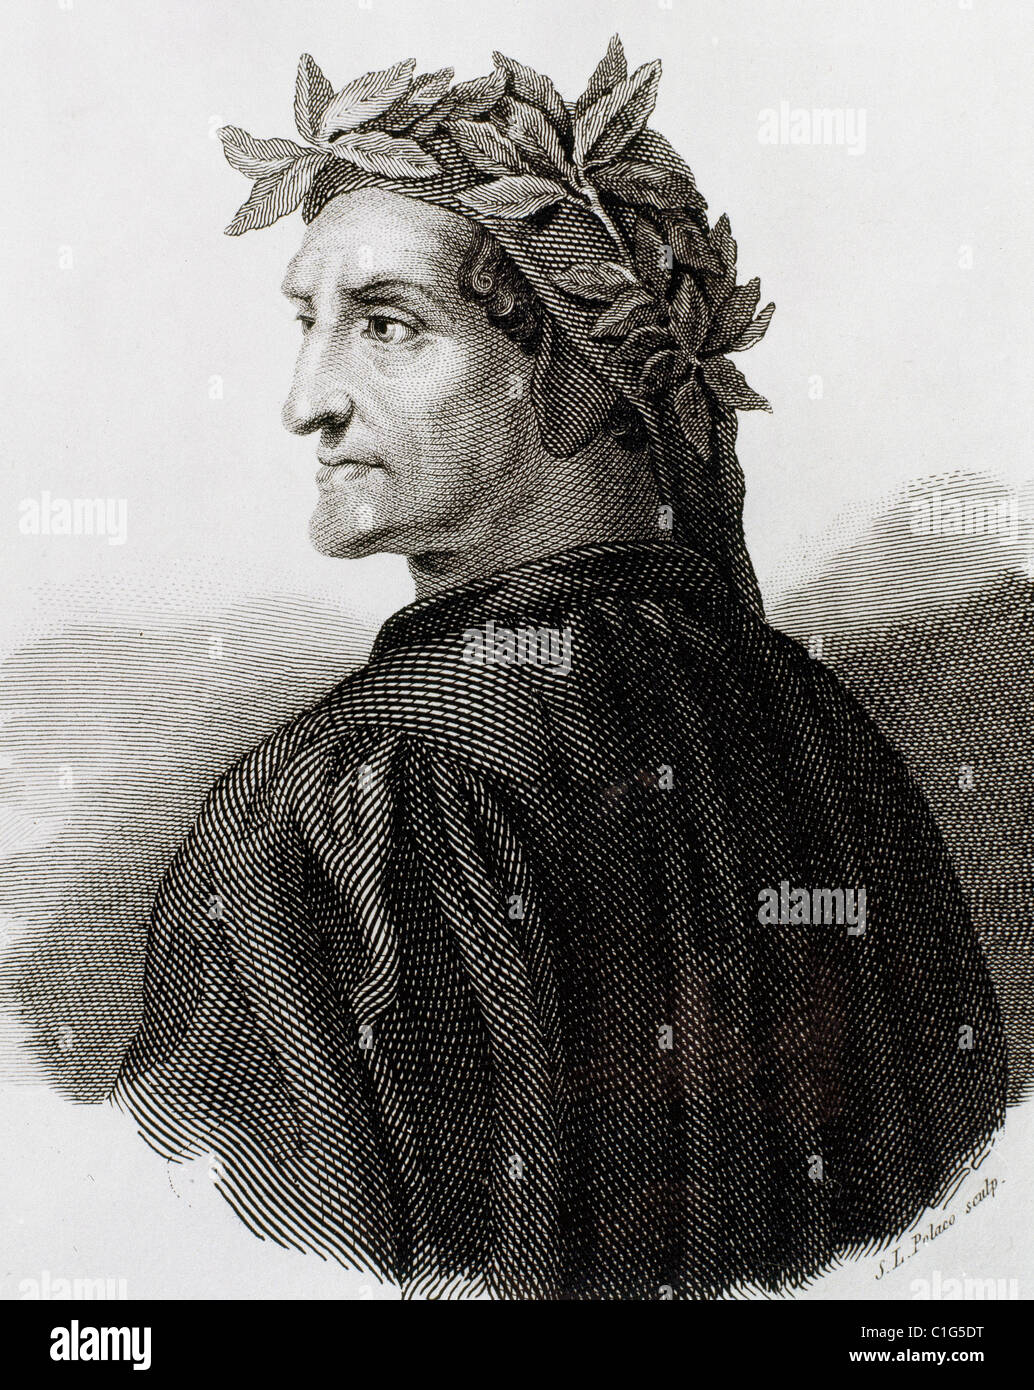 Dante Alighieri (1265-1321). Italian poet. Engraving. Stock Photo